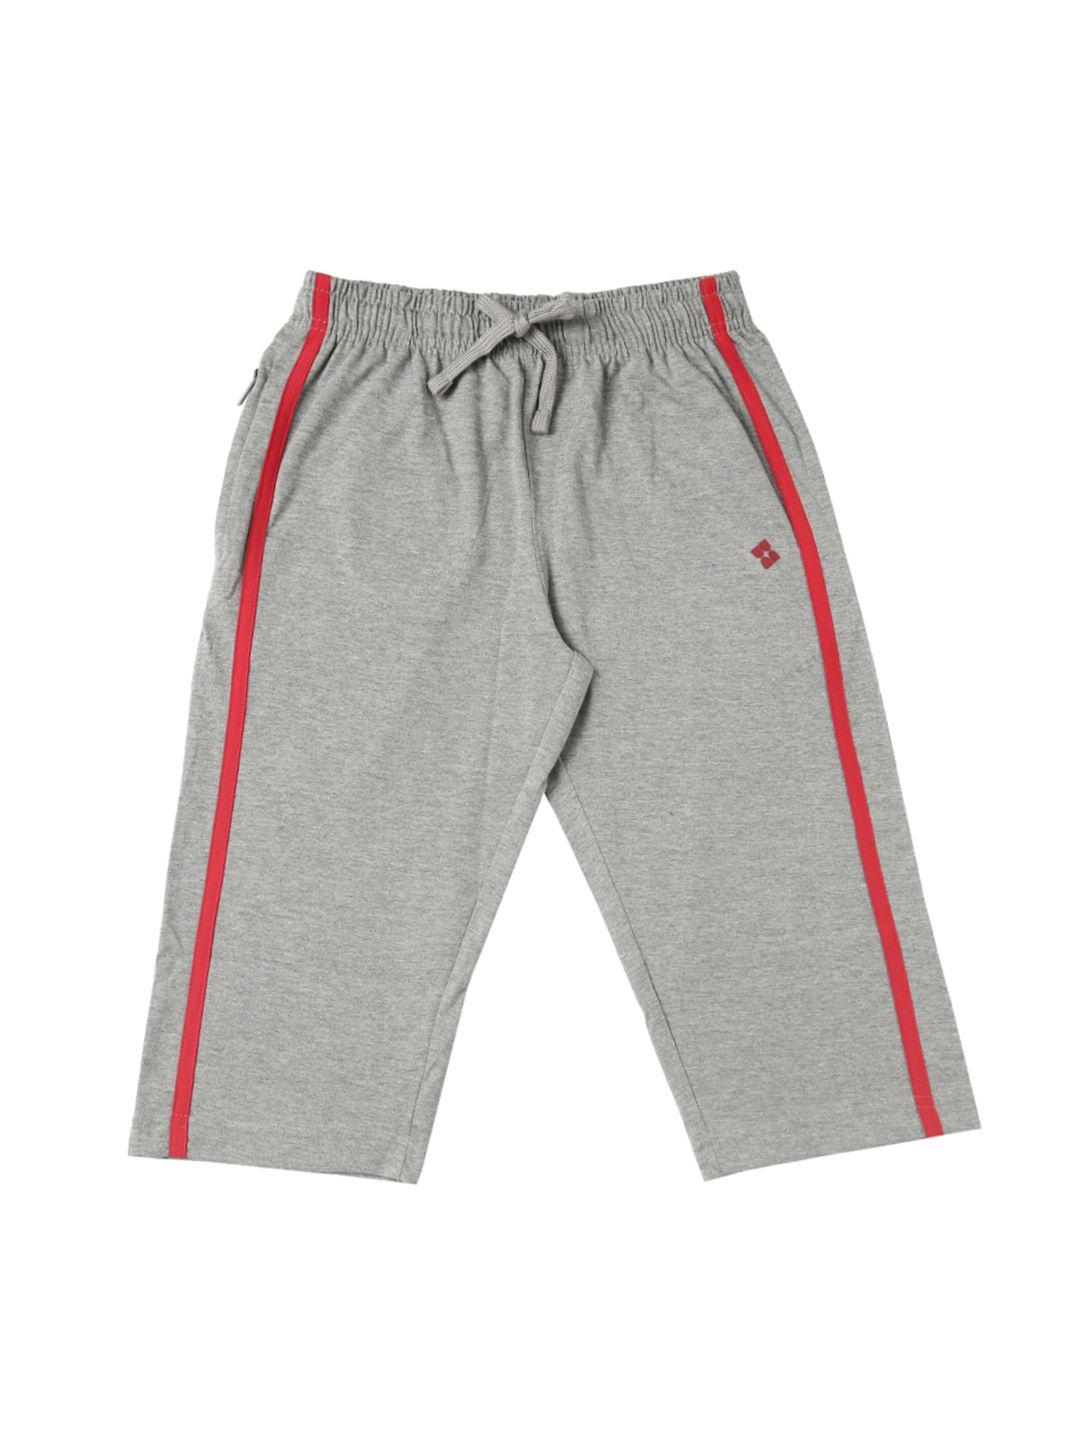 dollar-boys-grey-solid-regular-fit-regular-shorts